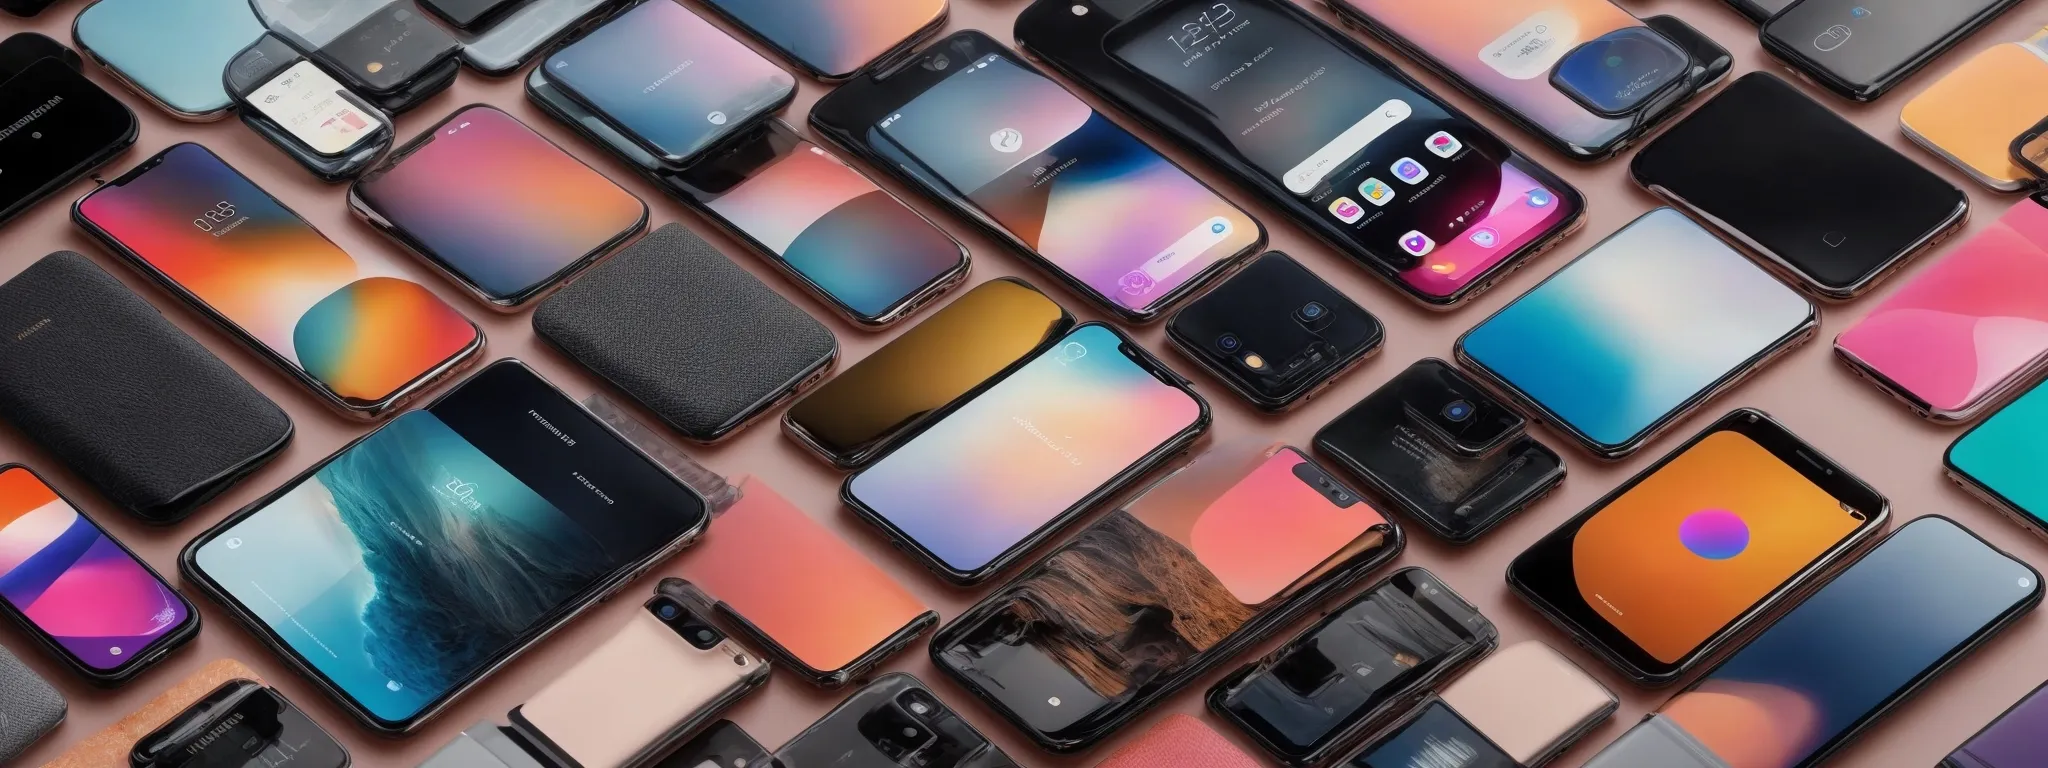 a grid of sleek smartphones displaying vibrant fashion posts on various social media applications.